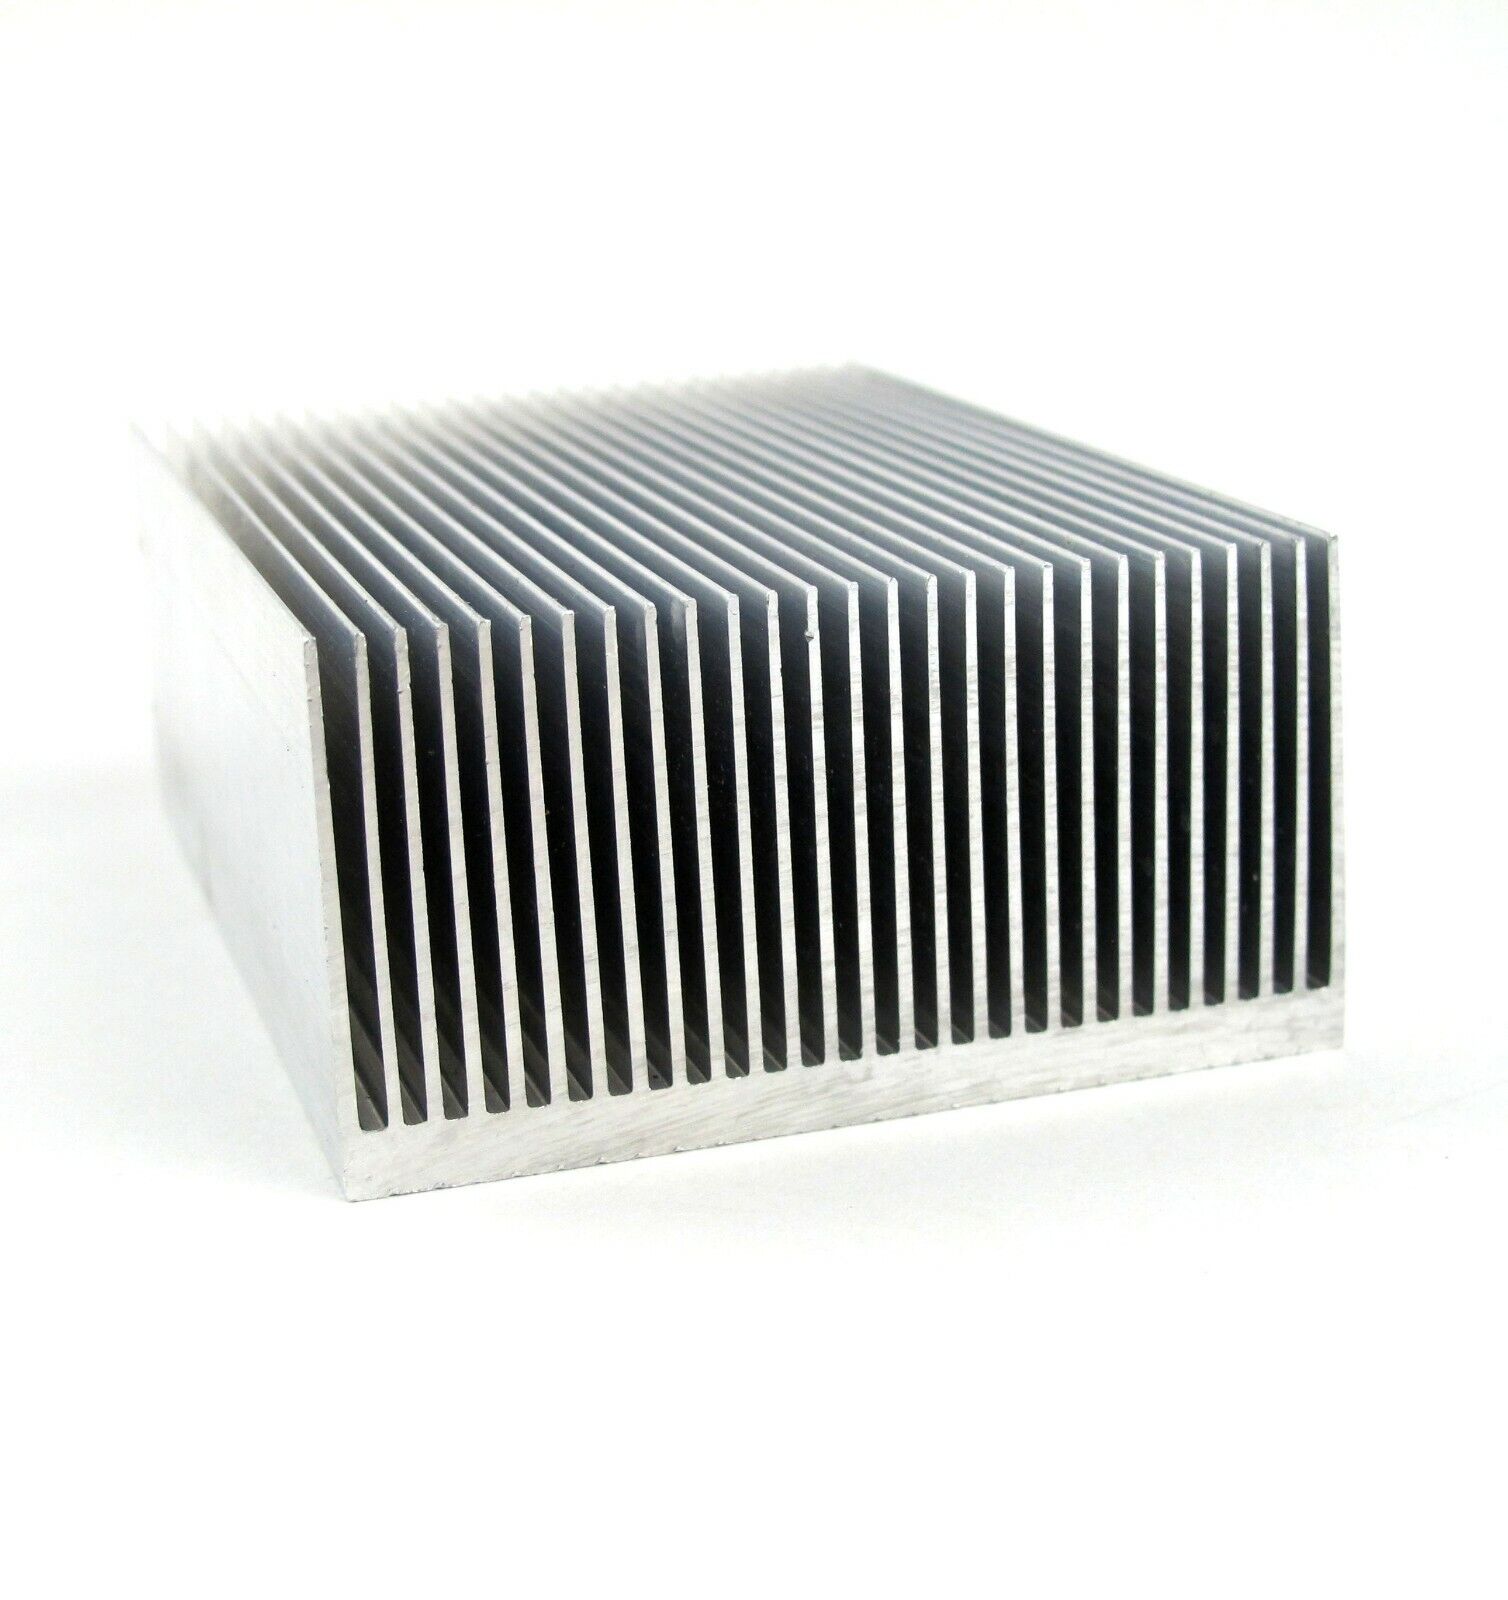 1pc Aluminum Heatsink Heat Sink Cooling For Led Amplifier Transistor IC Module